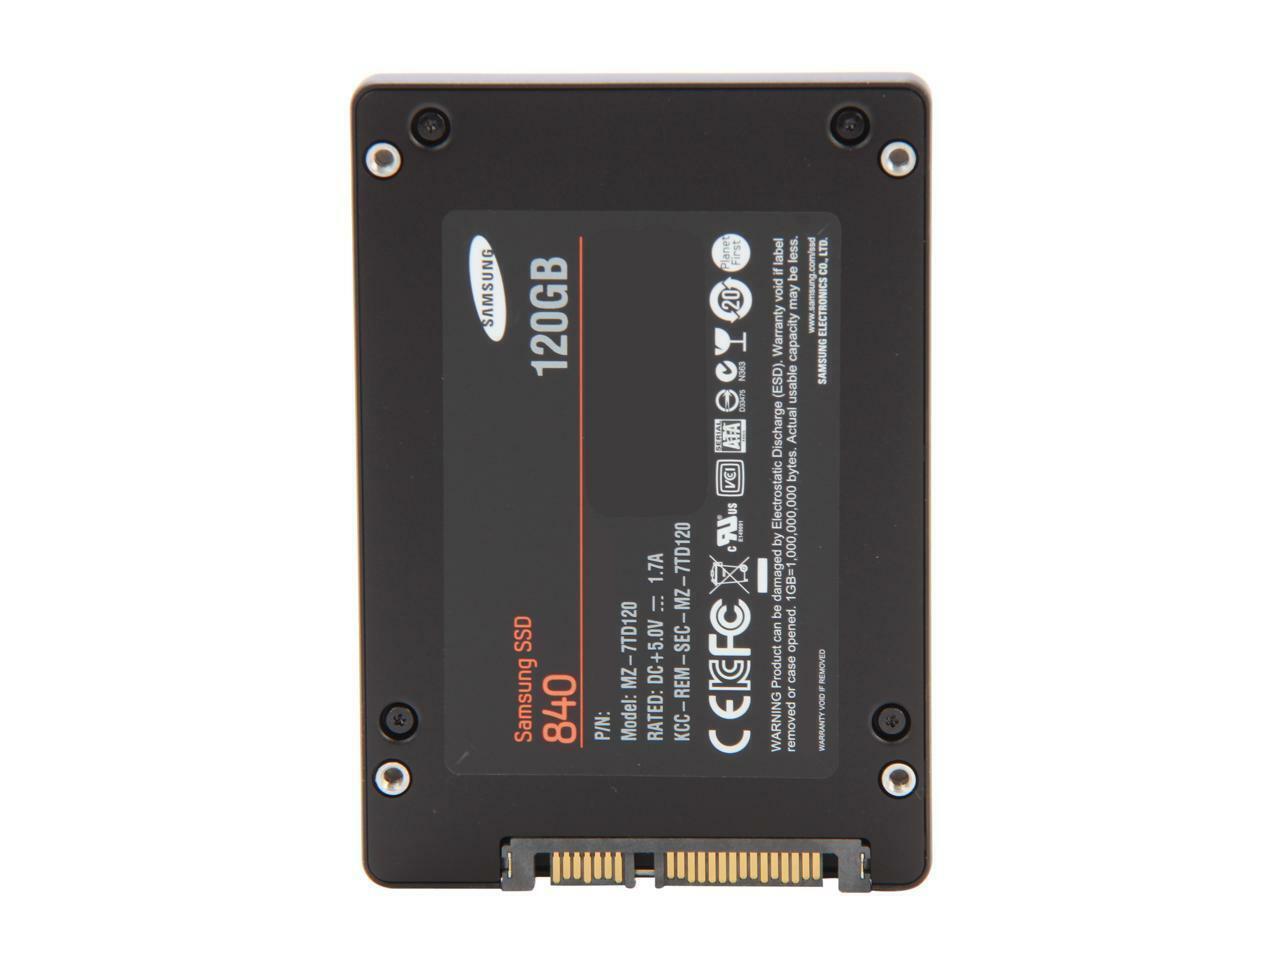 New SAMSUNG 840 SATA III Internal Solid State Drive SSD MZ-7TD120BW | eBay